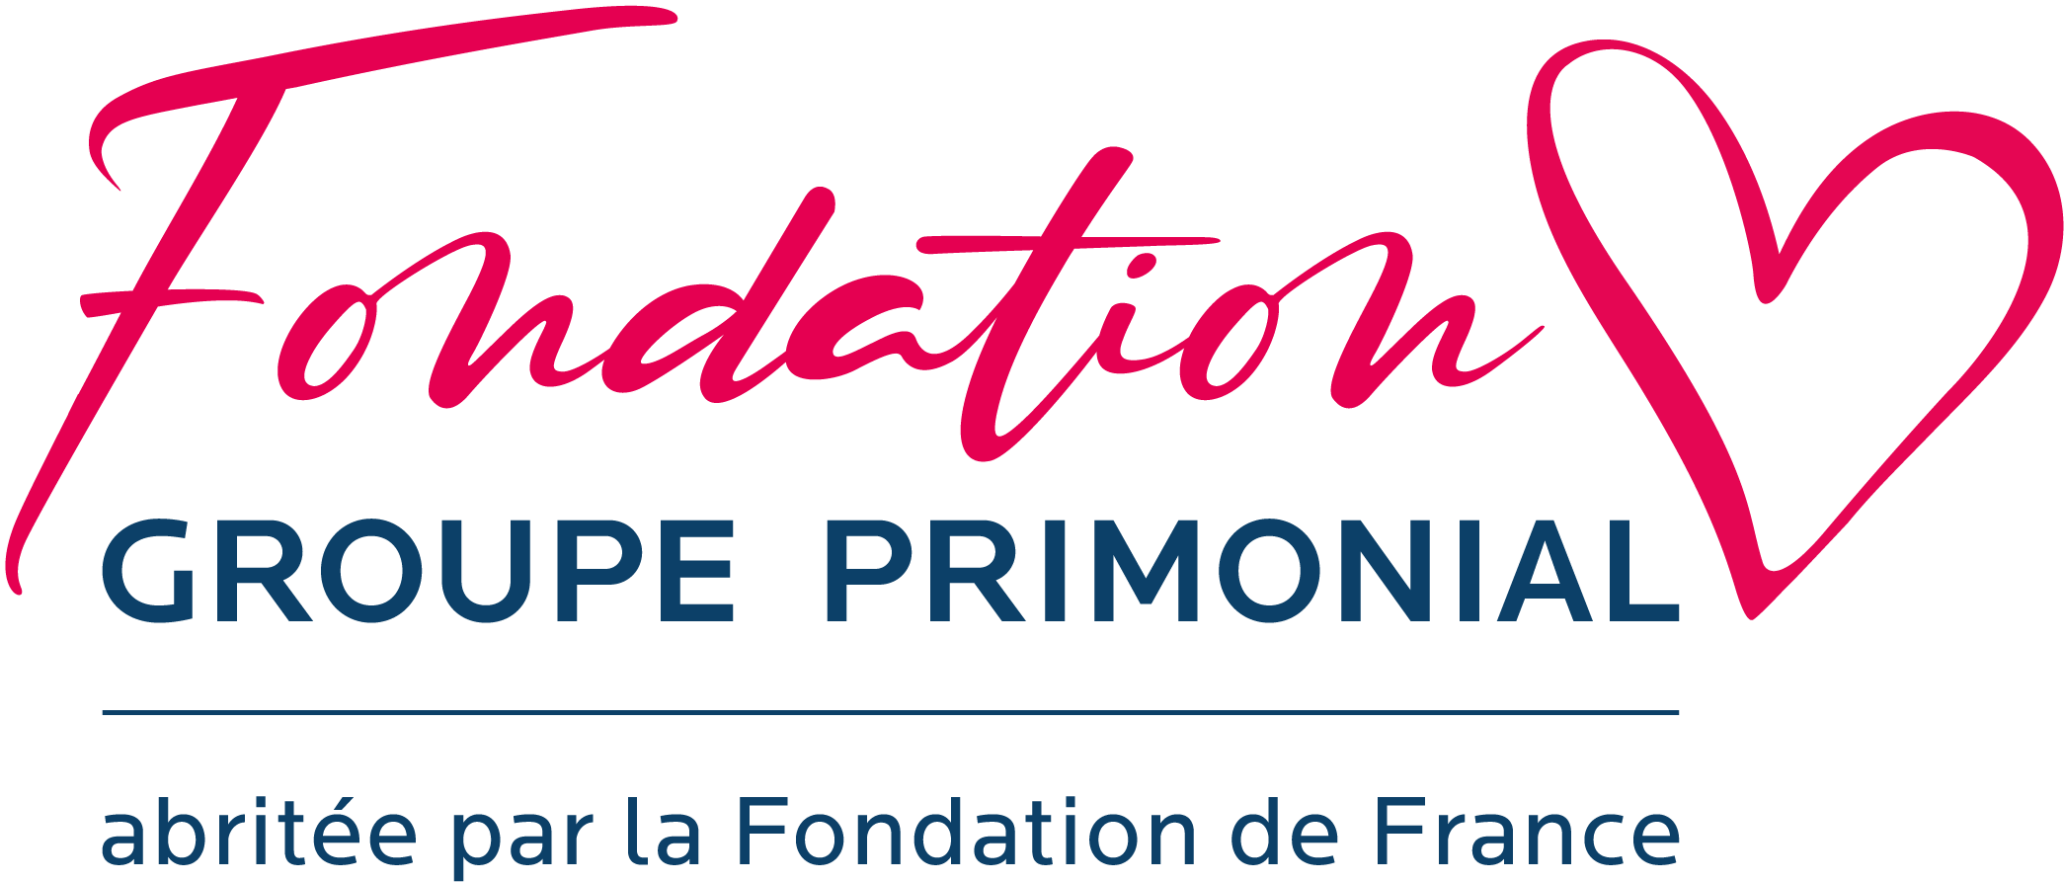 Fondation primonial